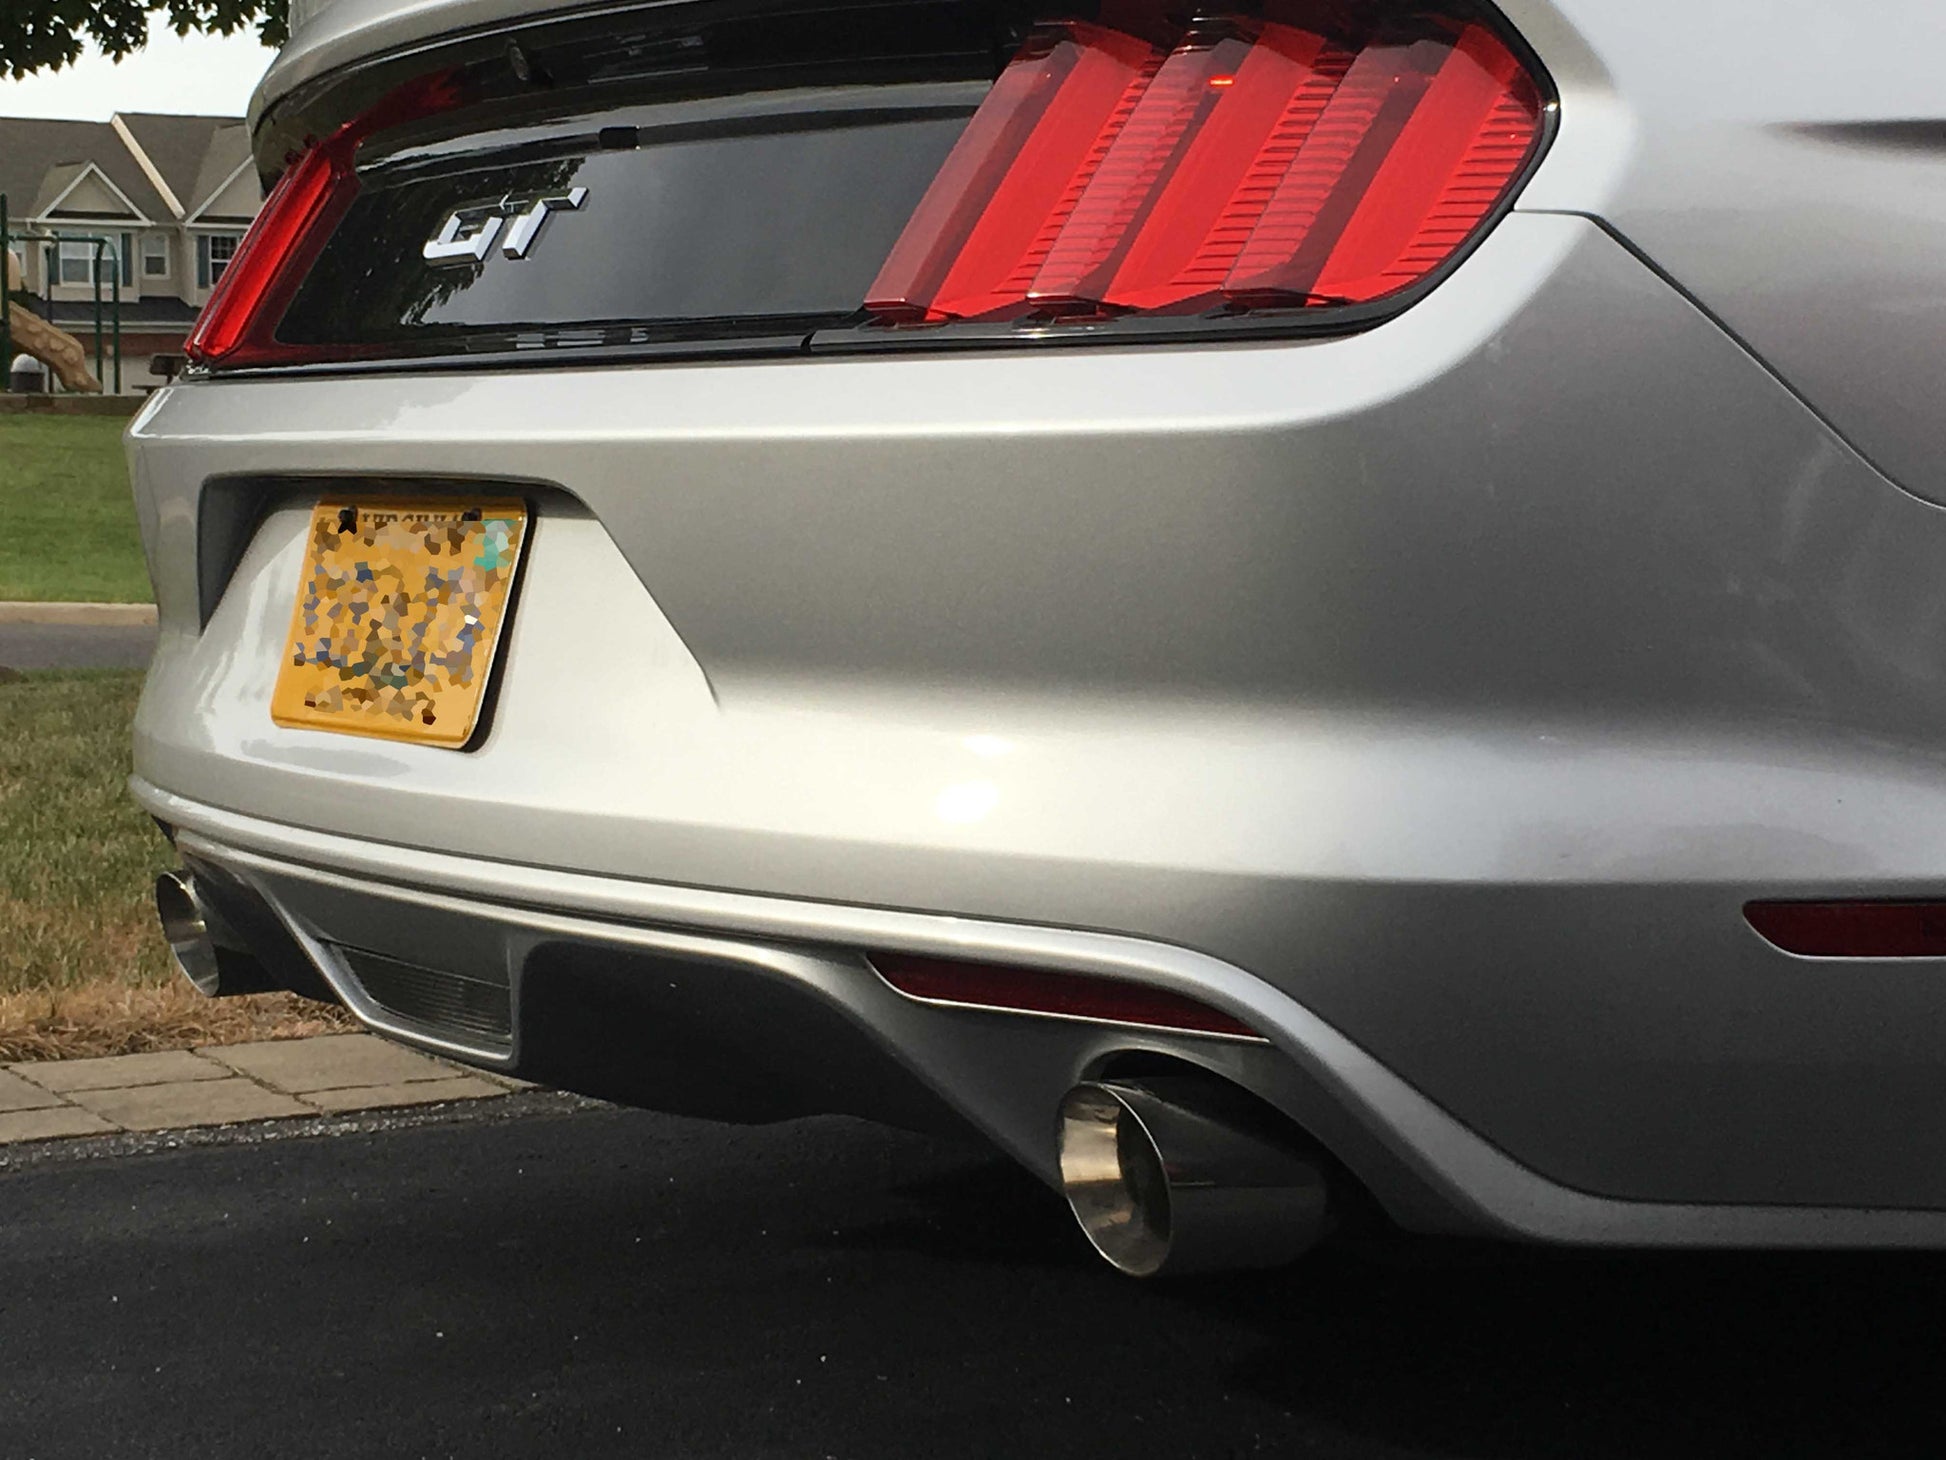 2015 Mustang GT axle back exhaust